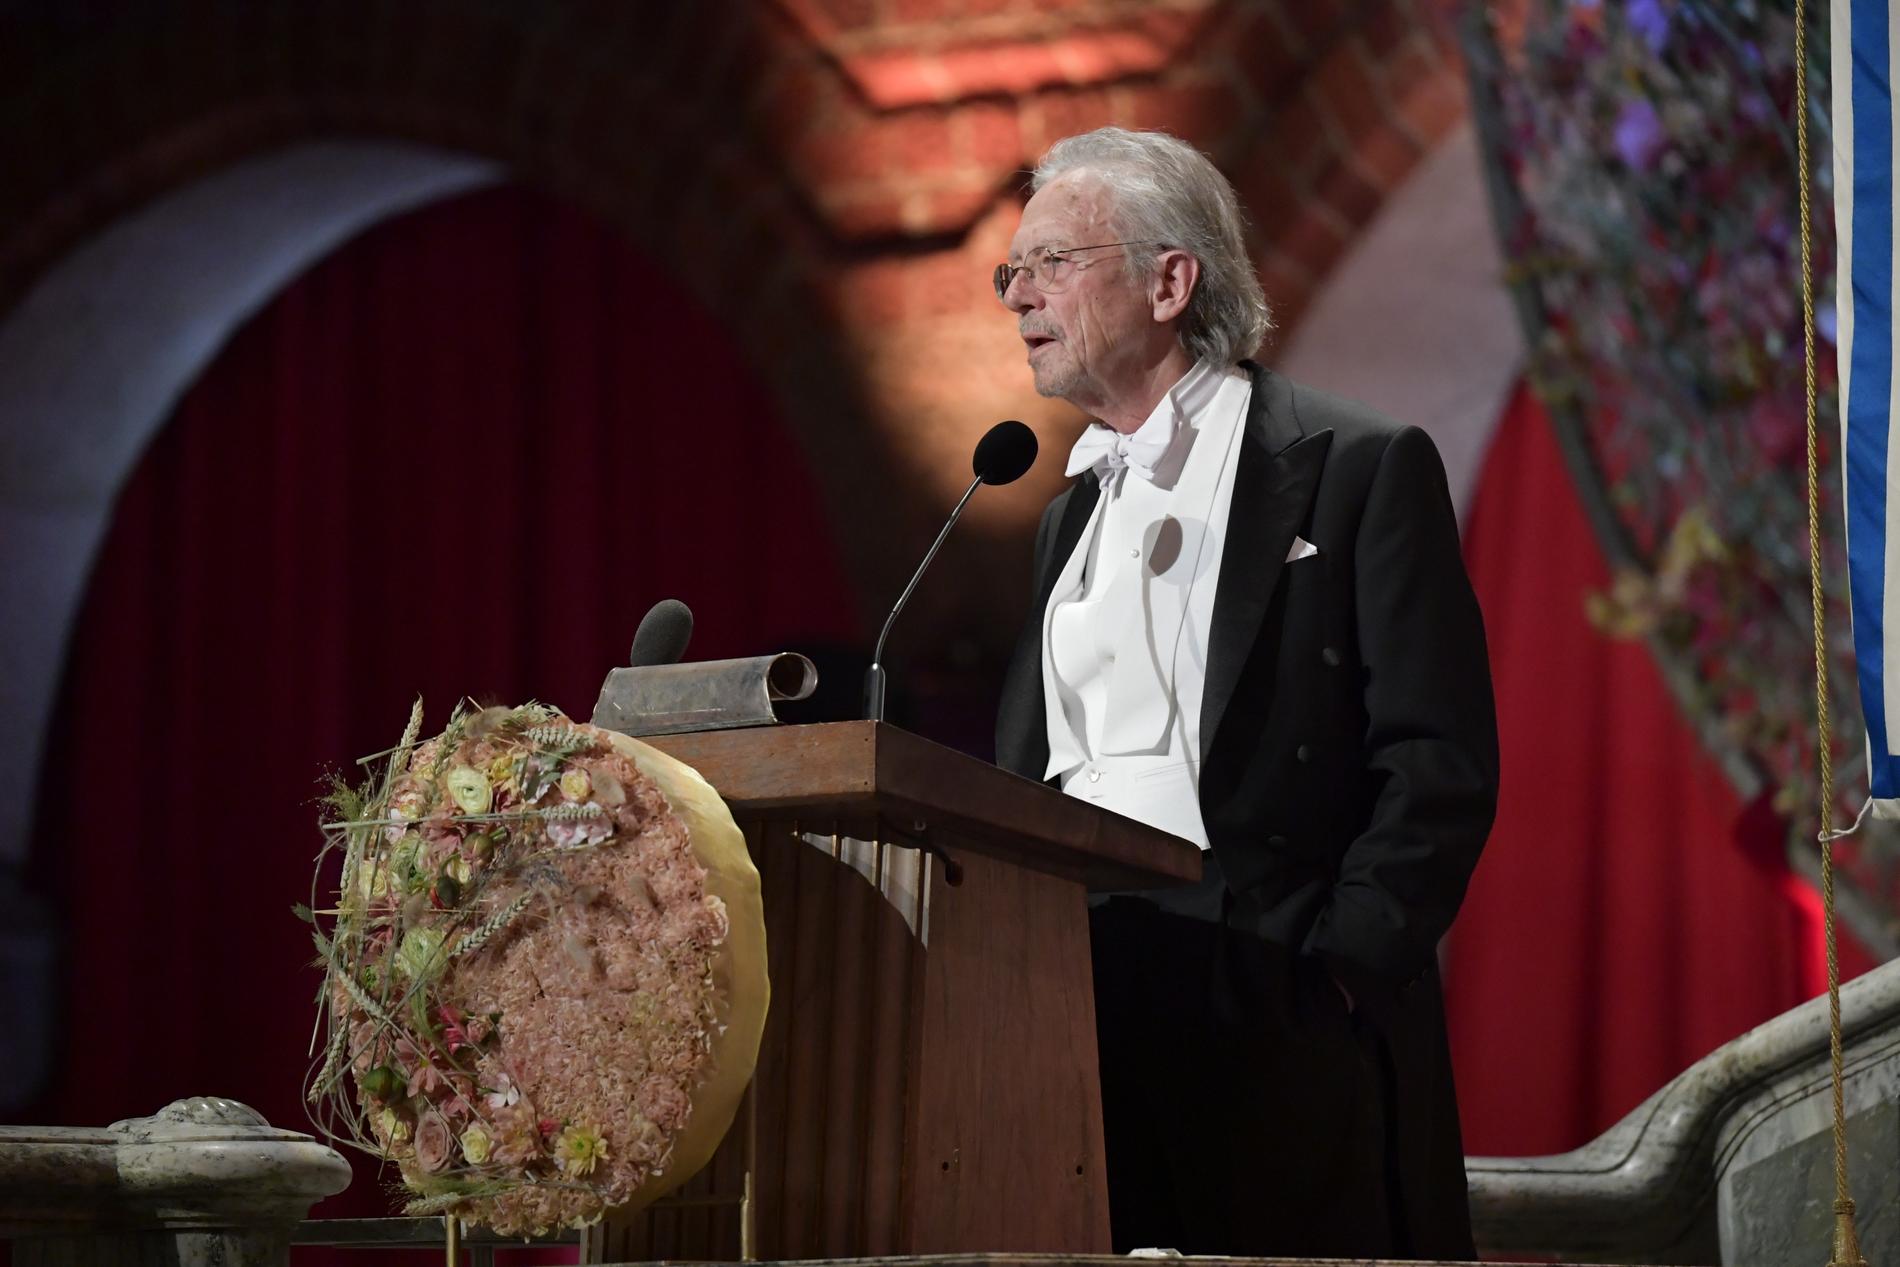 Peter Handke, Nobelpristagare i litteratur, håller tacktal under Nobelbanketten i Stockholms stadshus.